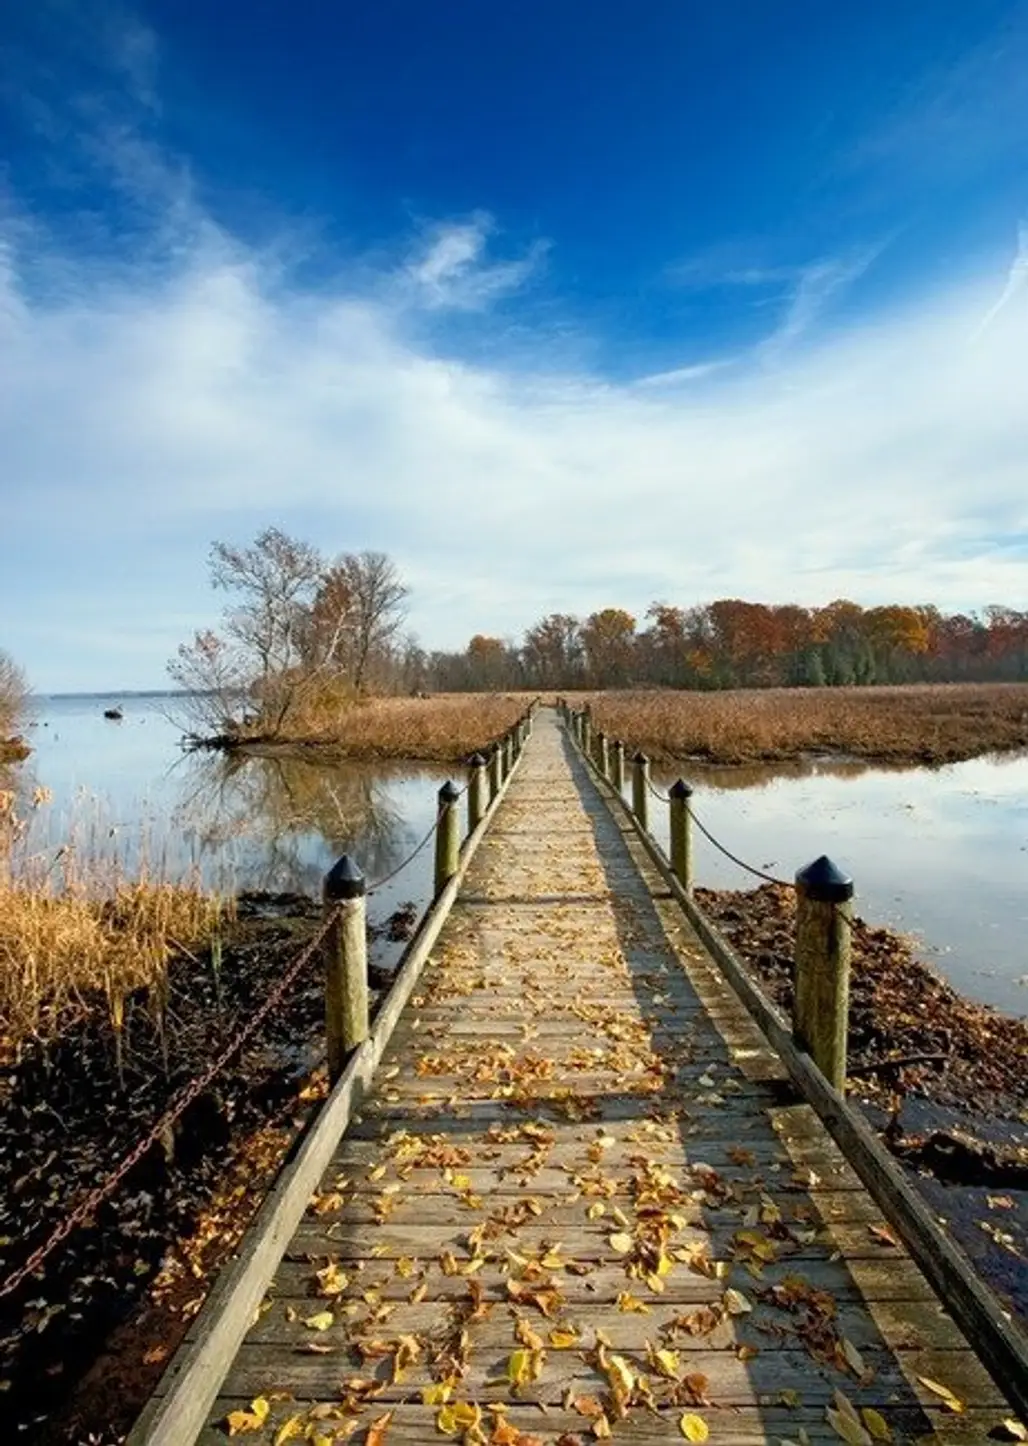 Maryland – Piscataway National Park